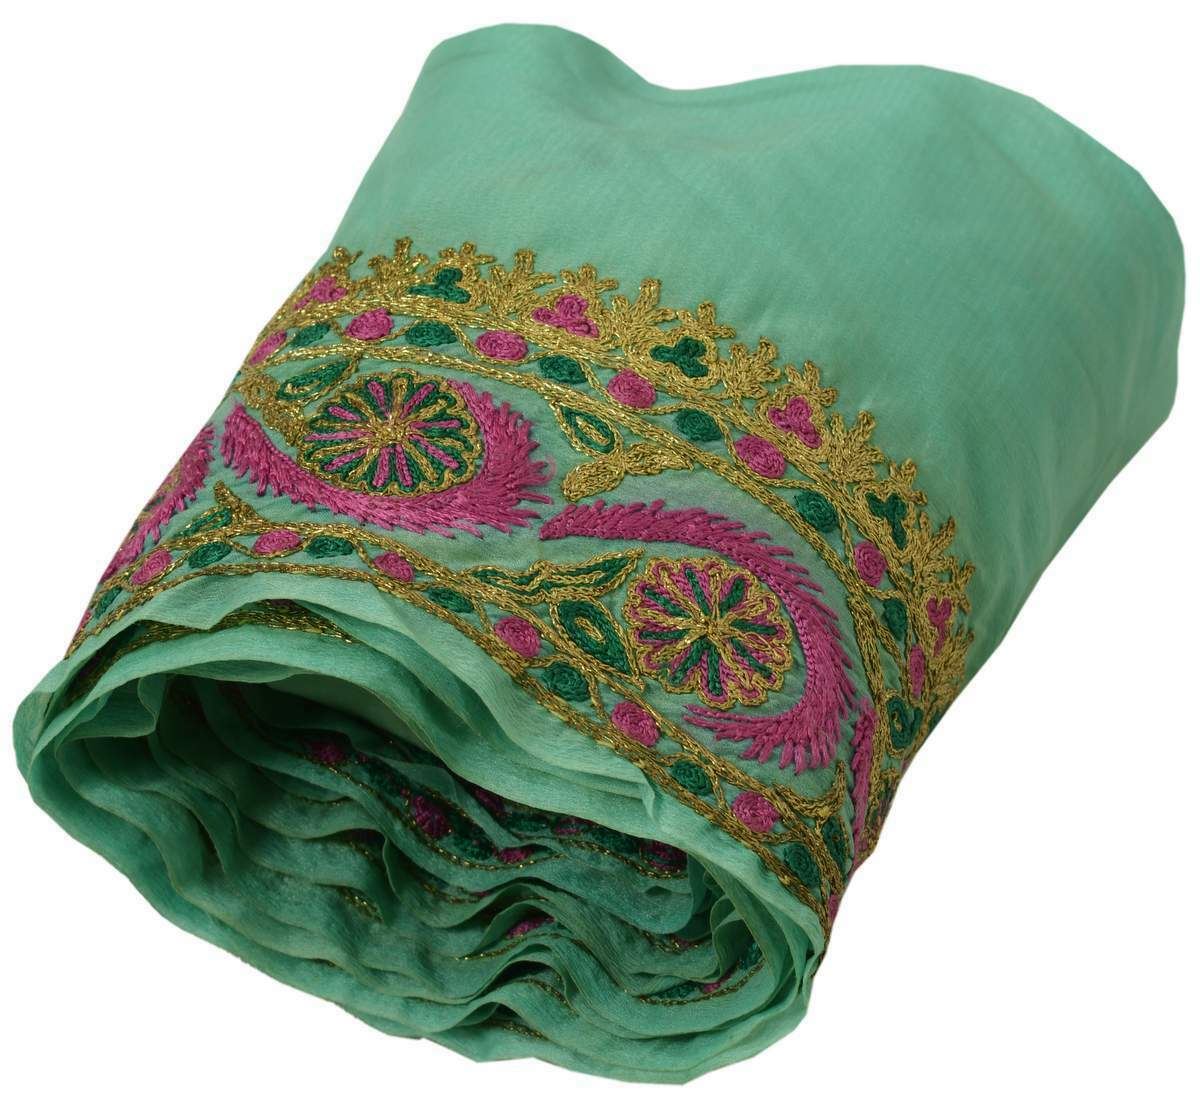 Vintage Sari Border Indian Craft Trim Embroidered Floral Green Lace Ribbon Wrap